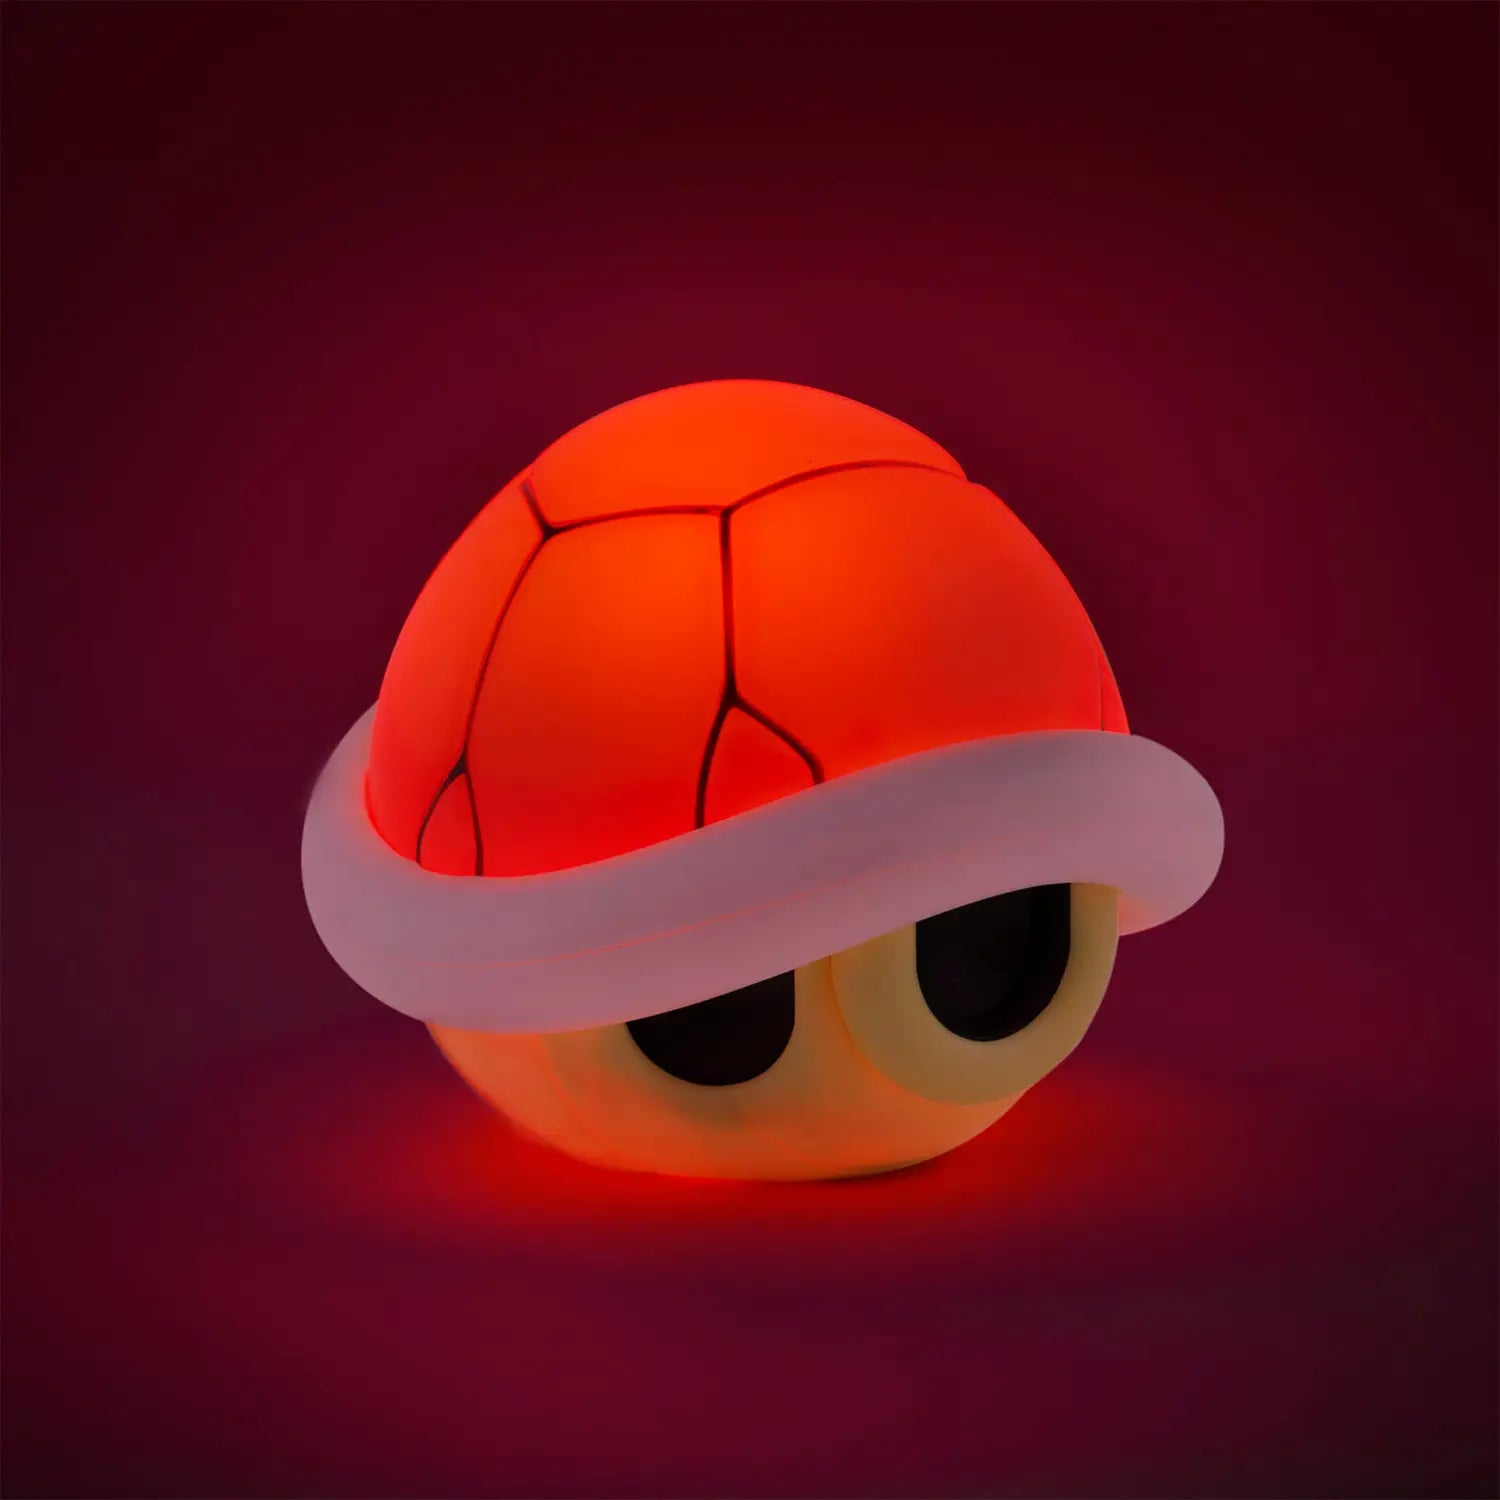 Super Mario Kart Red Shell Light